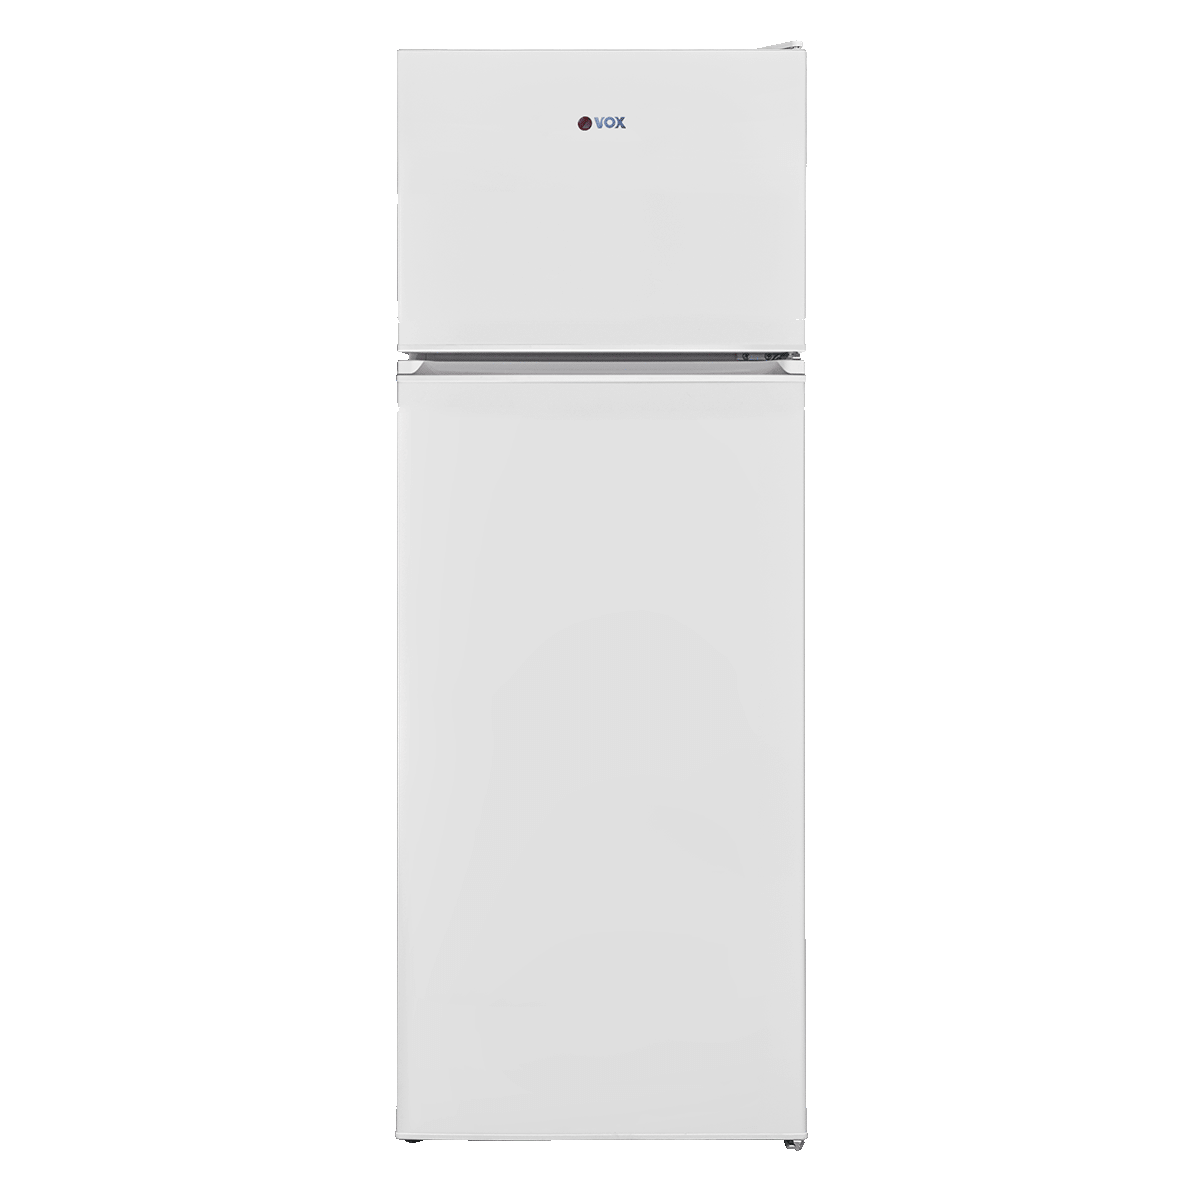 Refrigerator KG 2630 F 